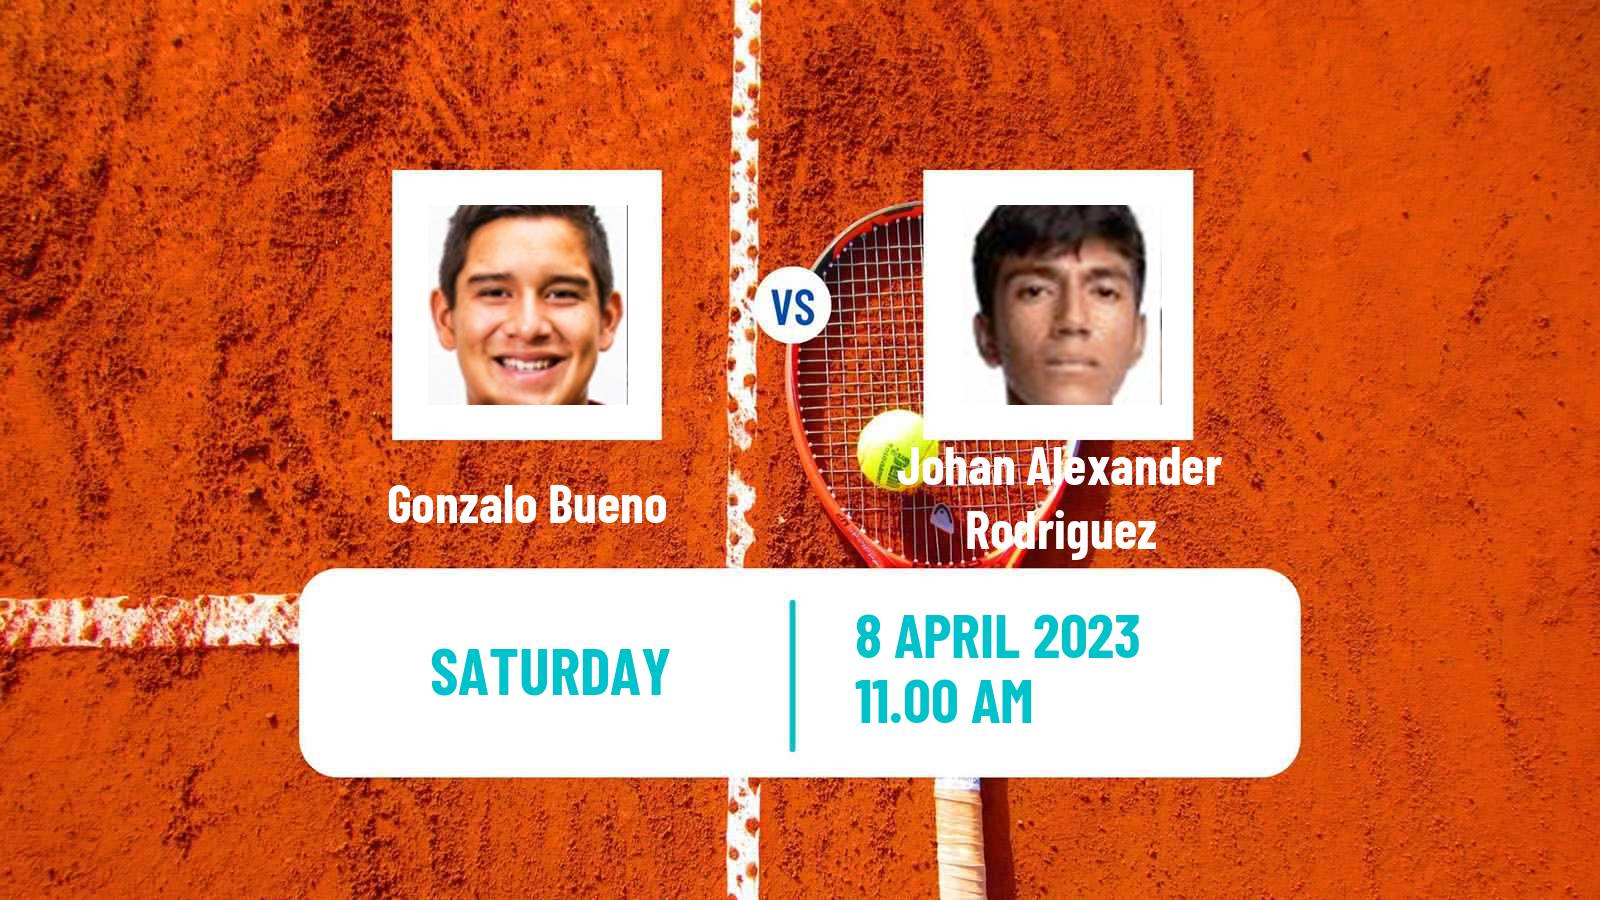 Tennis ITF Tournaments Gonzalo Bueno - Johan Alexander Rodriguez